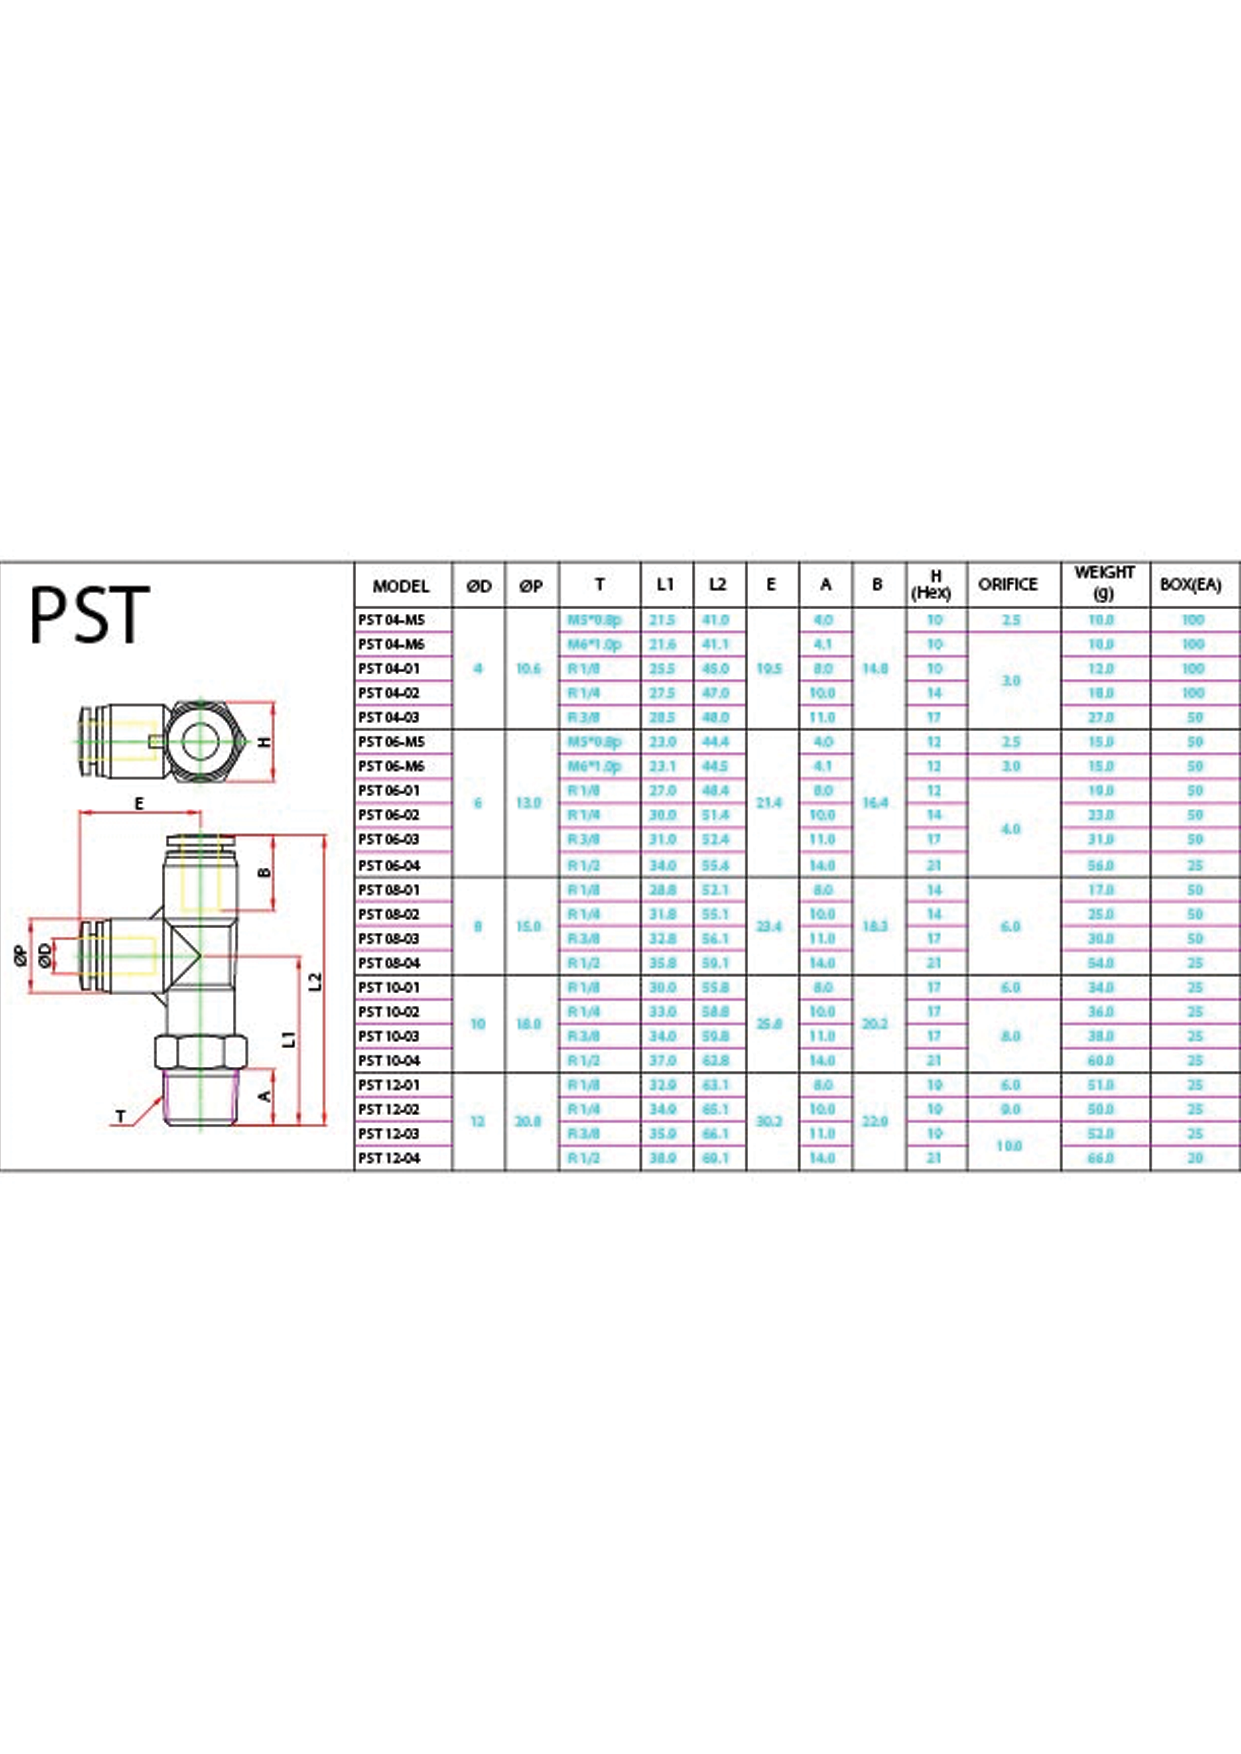 PST (Metric) Data Sheet ( 155 KB )